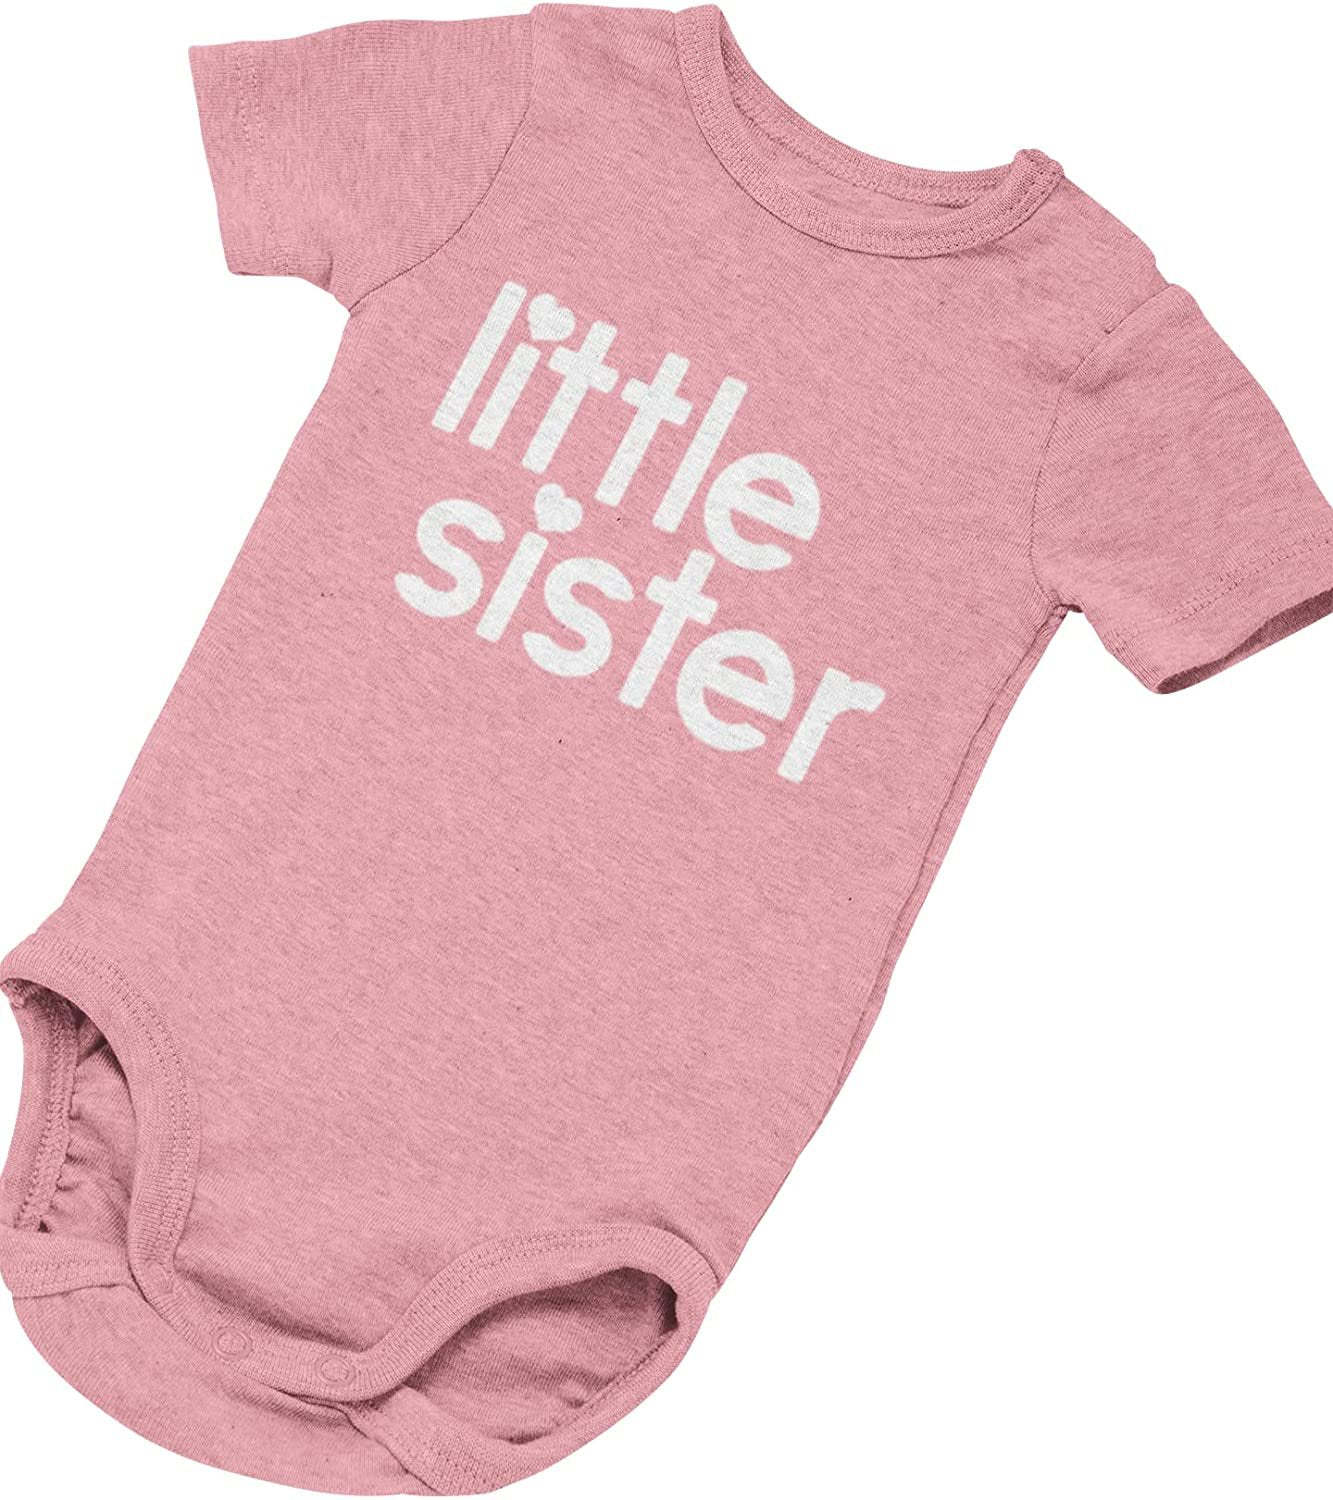 Little Sister Newborn Announcement Baby Gift Bodysuit (Pink)